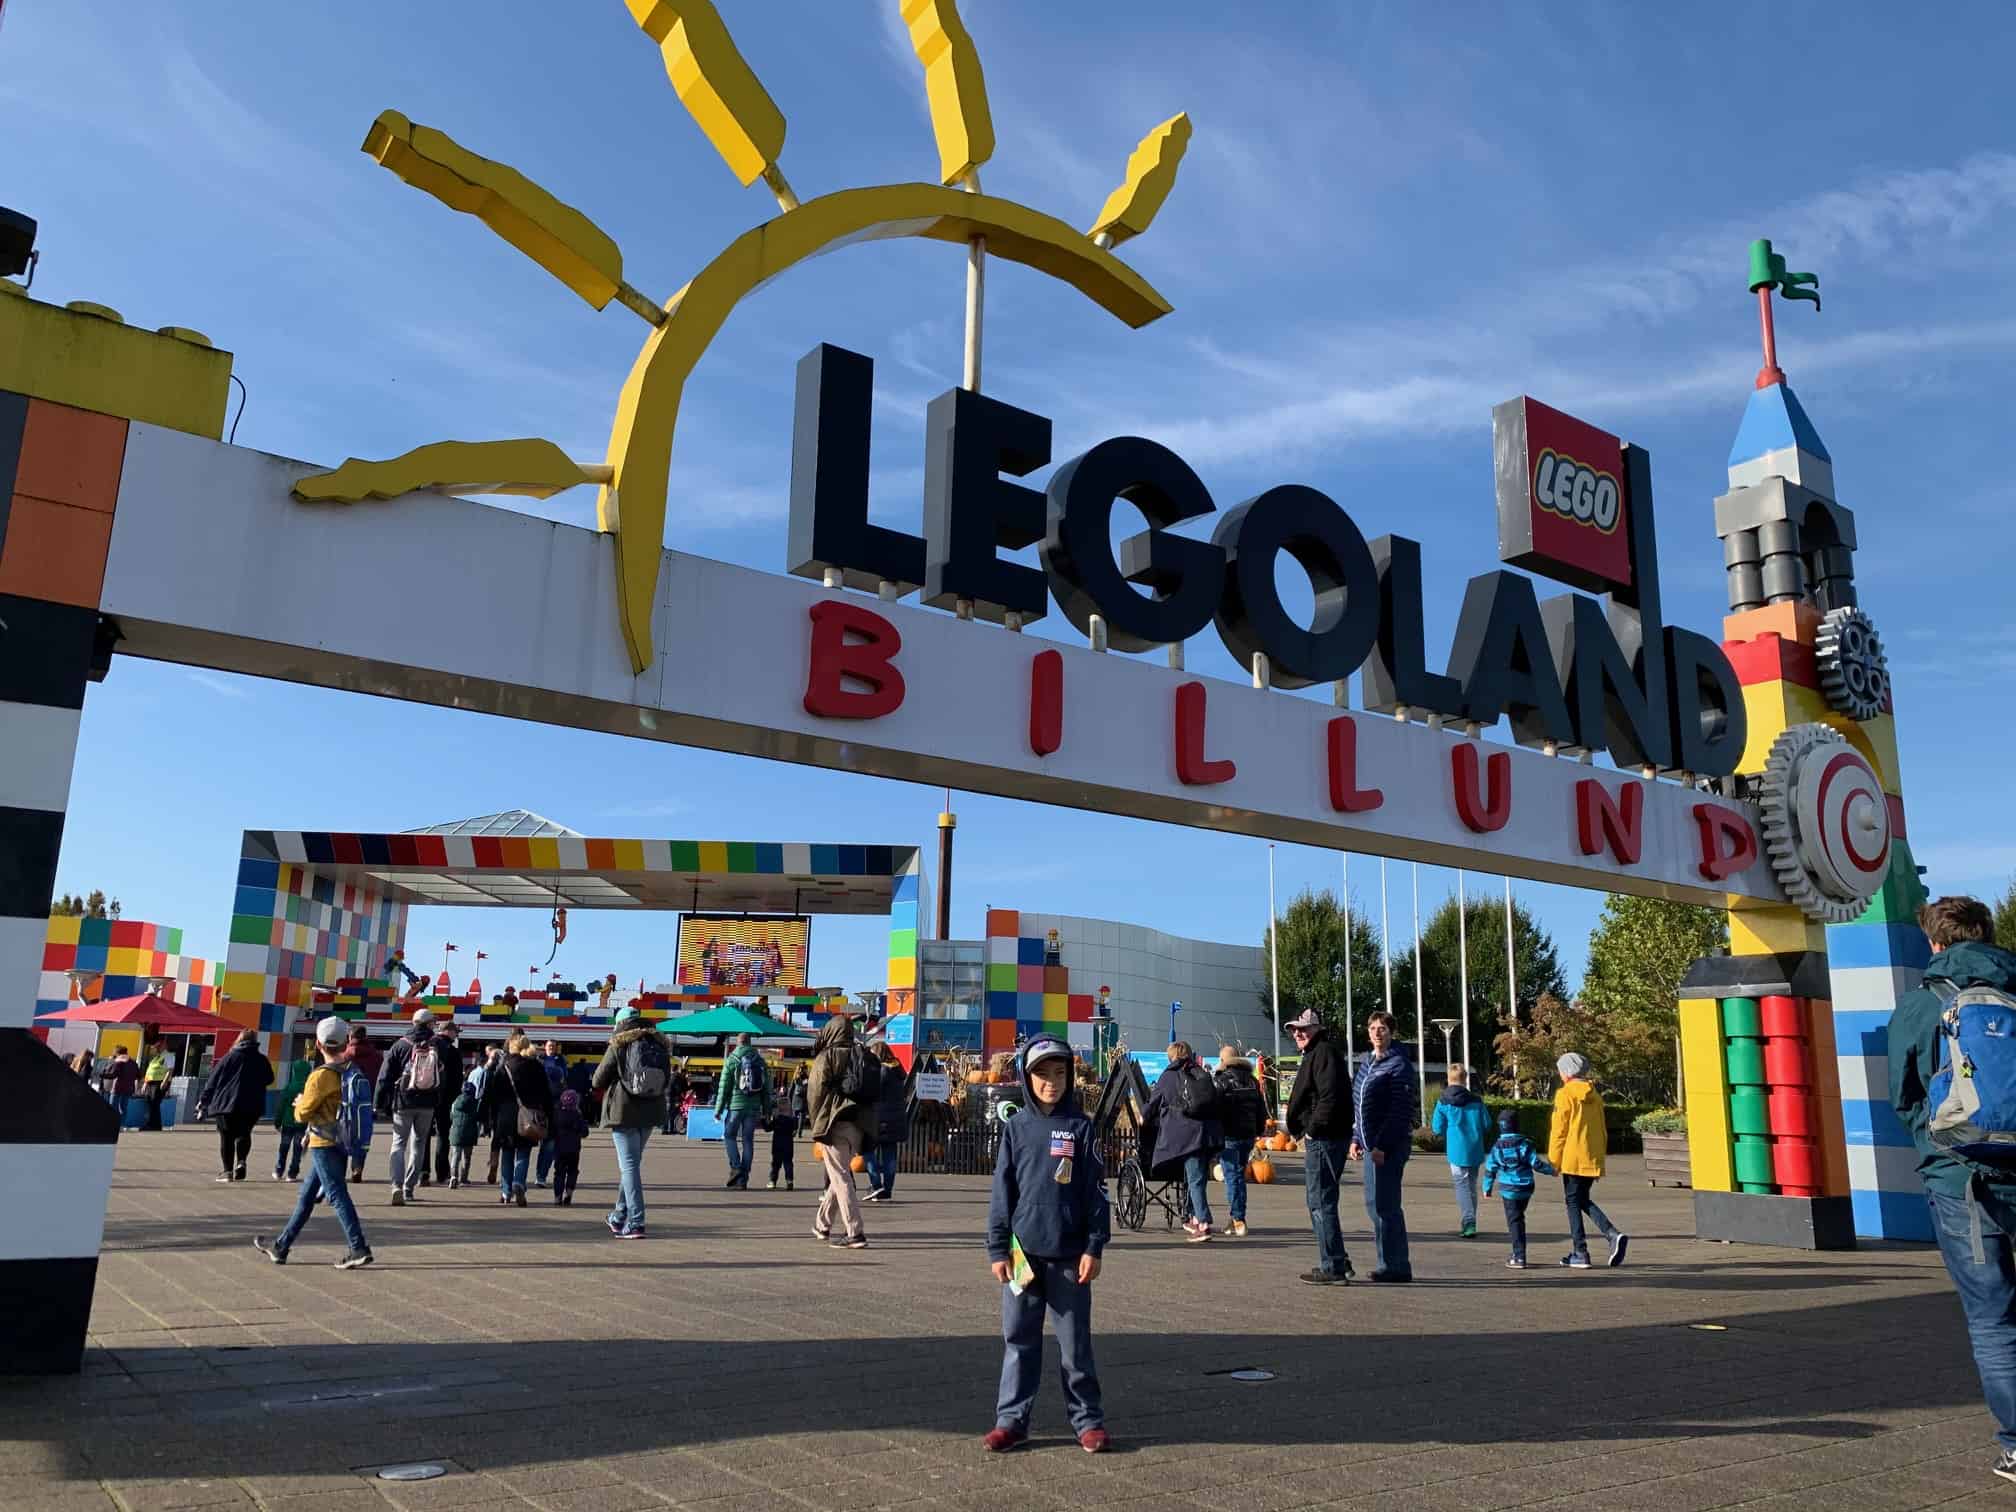 Legoland Billund Denmark Timothy October 2019